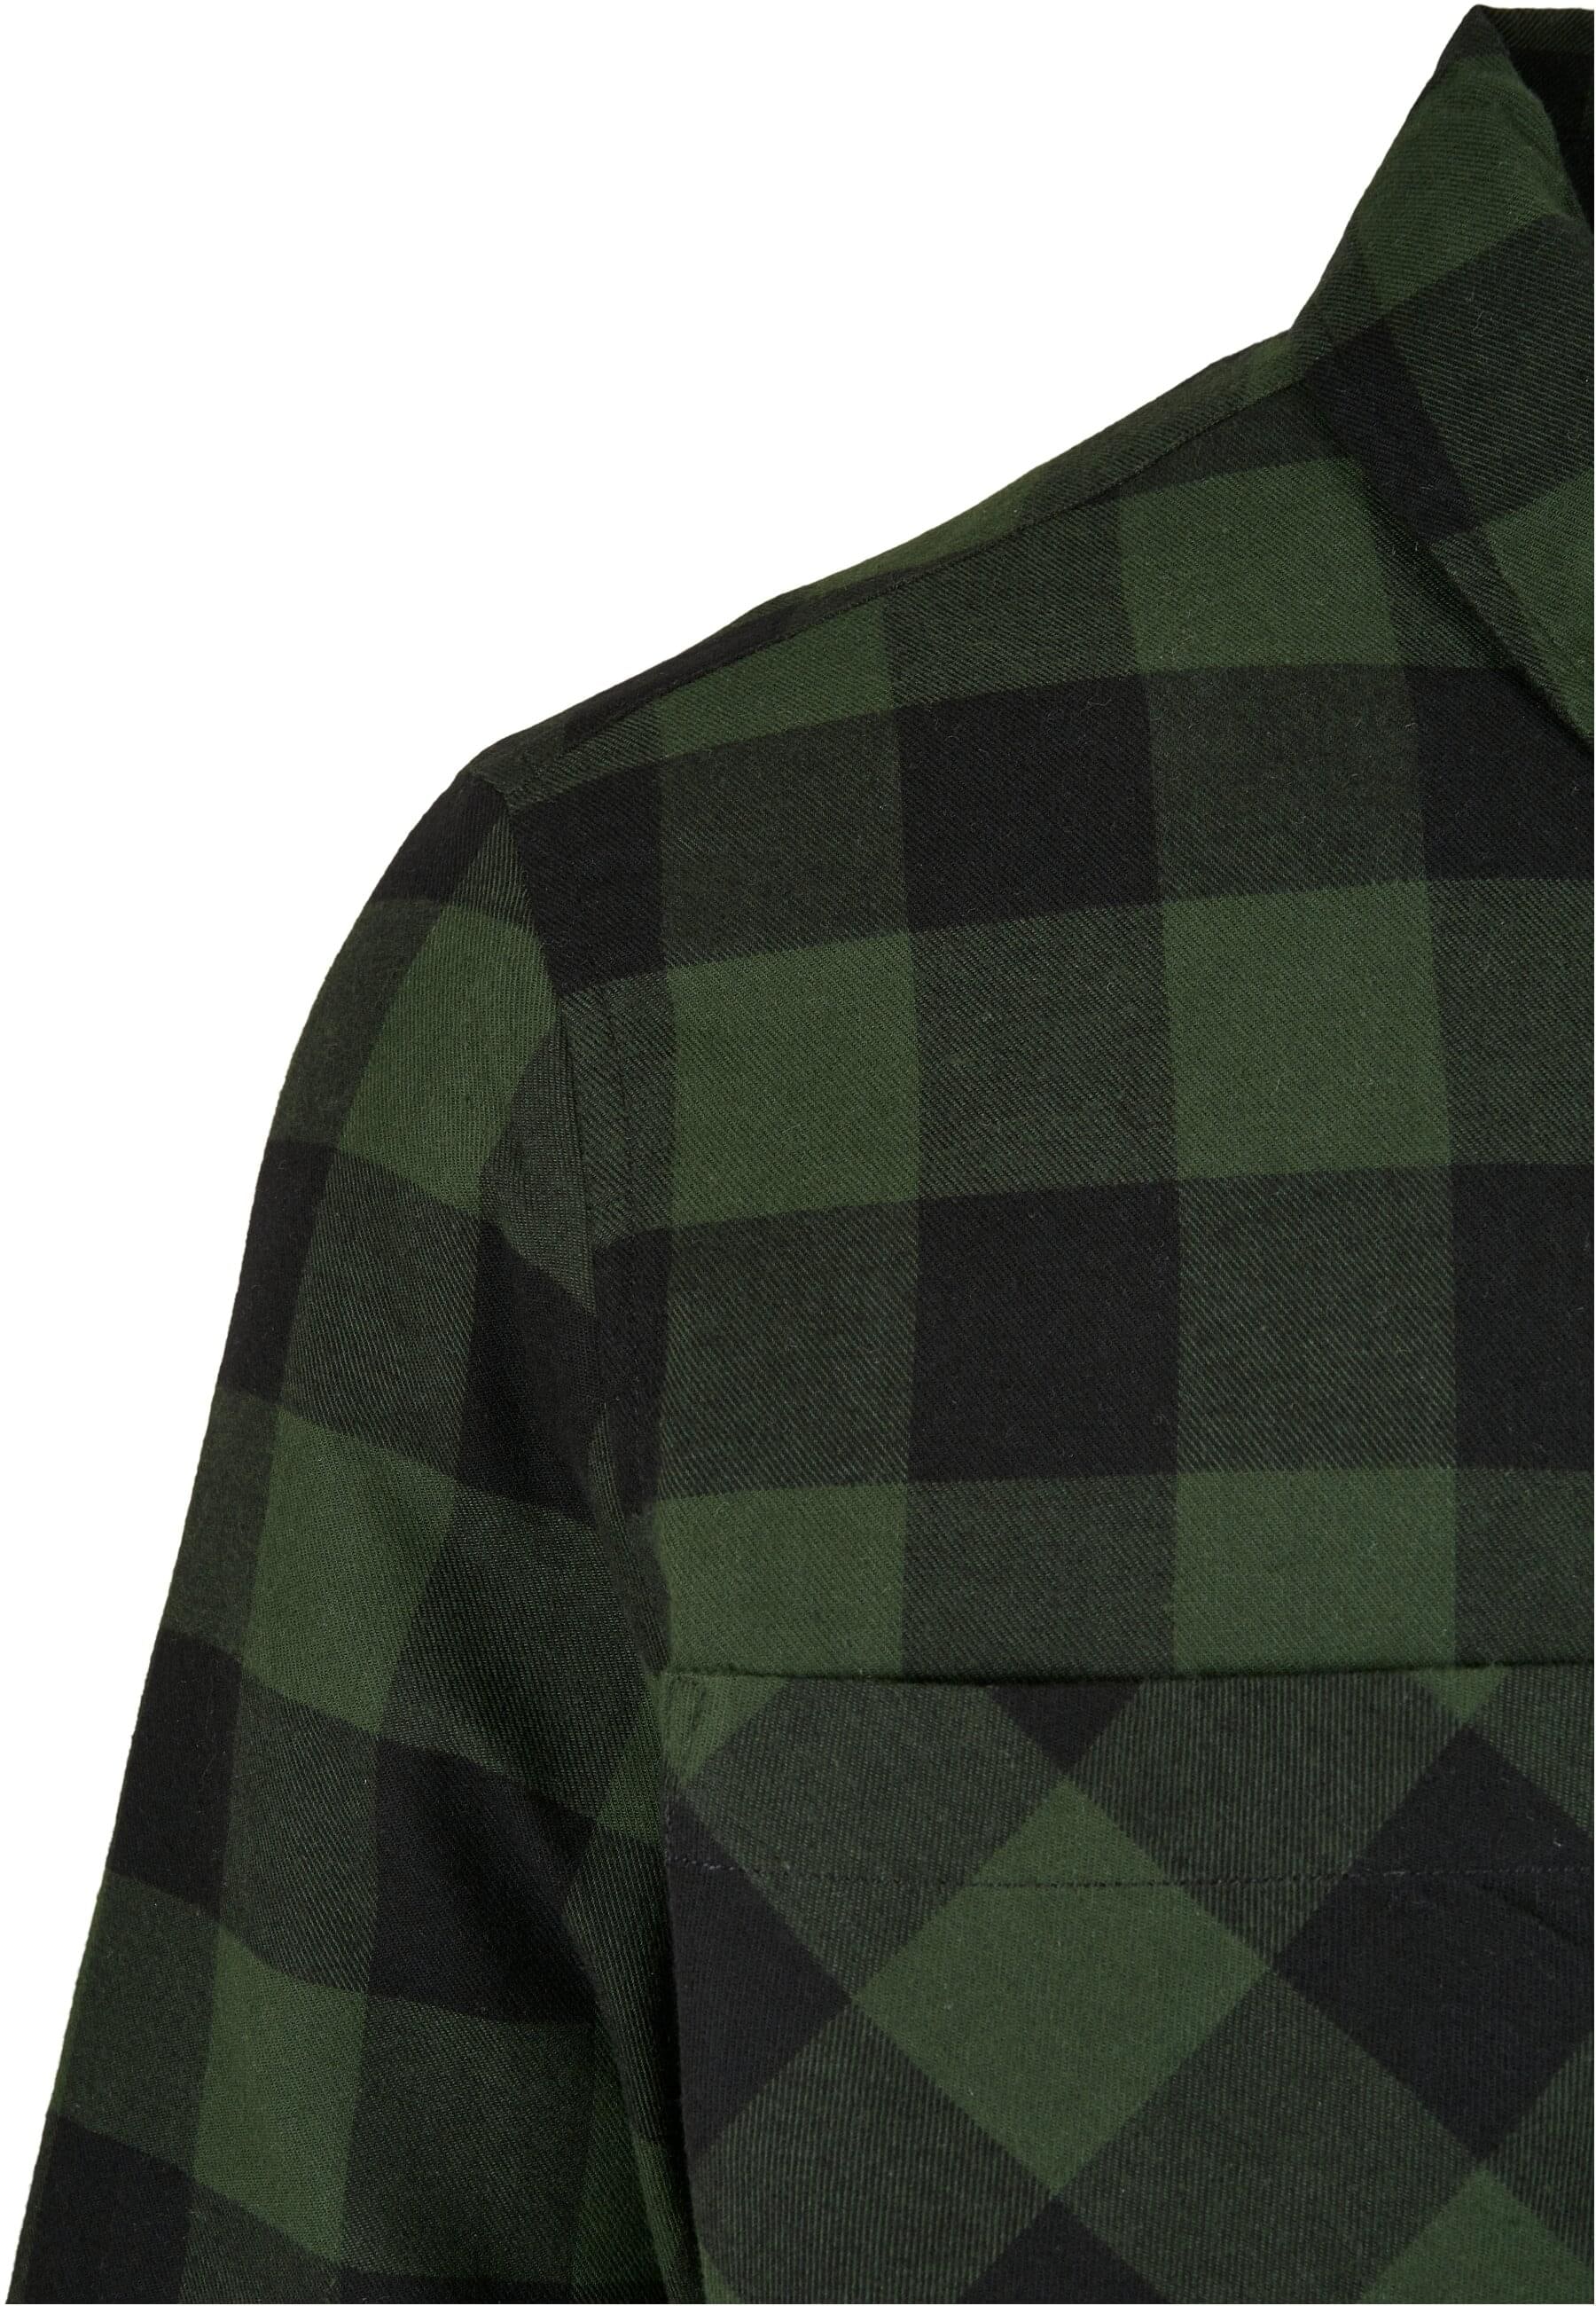 URBAN CLASSICS Langarmhemd »Urban Classics Herren Padded Check Flannel Shirt«, (1 tlg.)